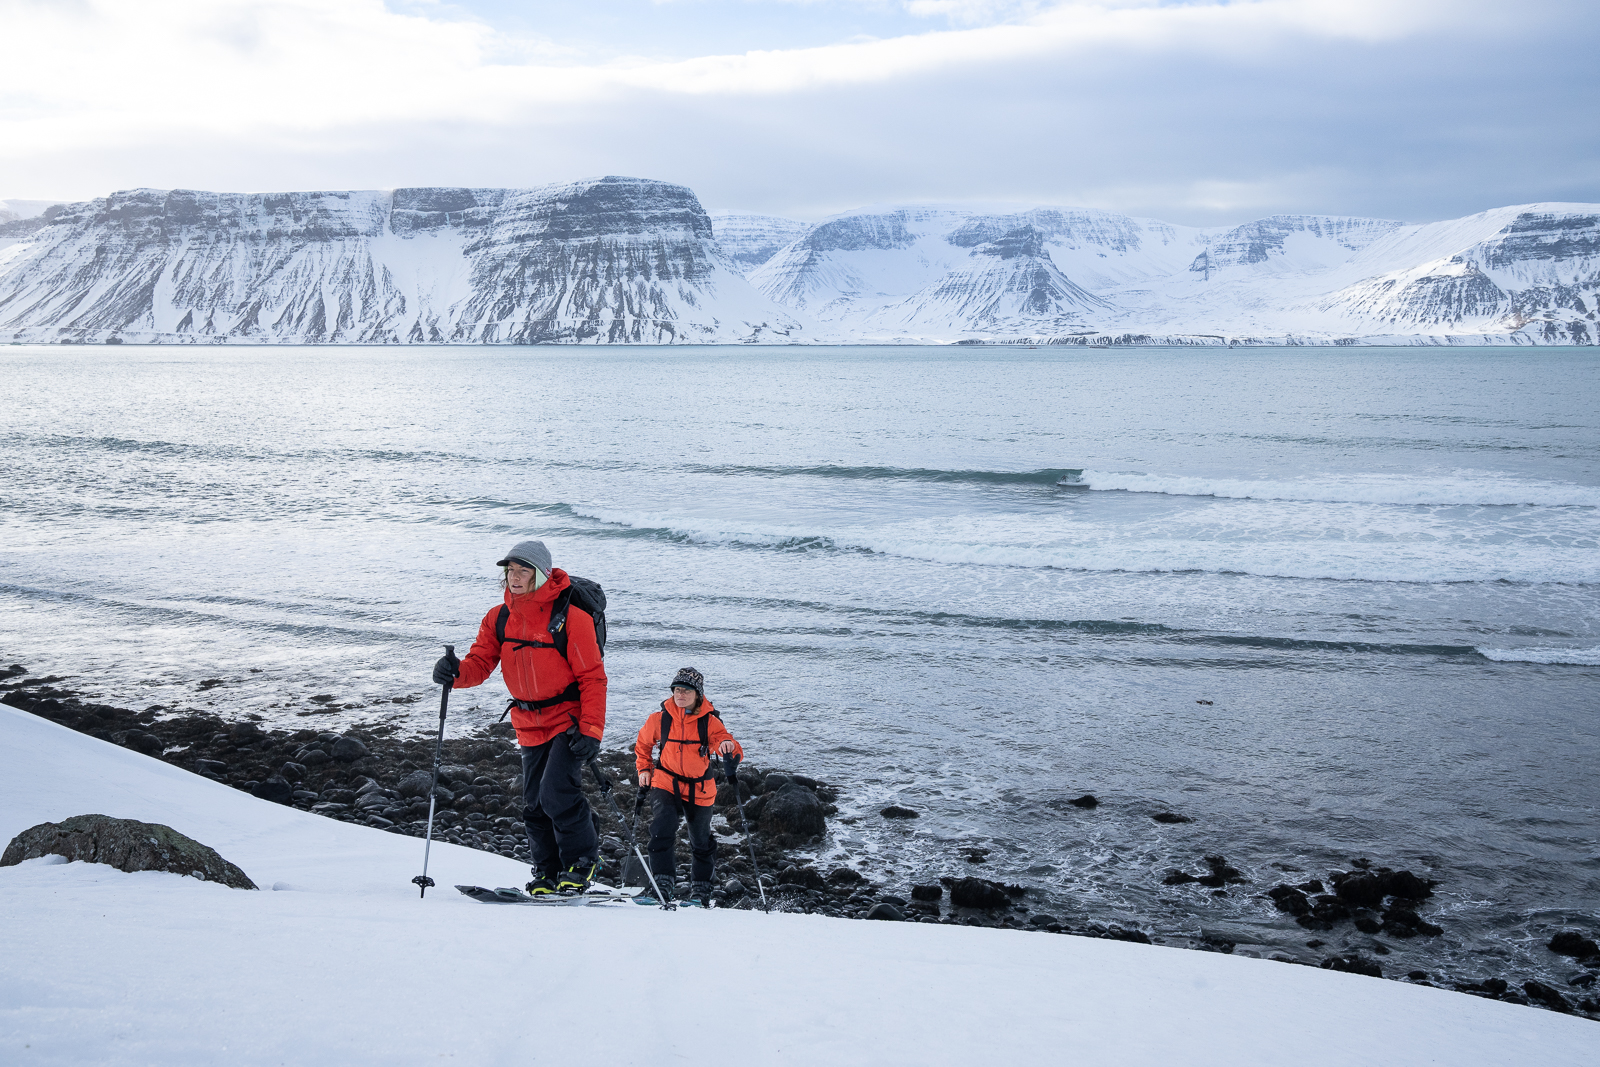 Elena Hight and Robin Van Gyn splitboarding above a breaking wave. Westfjords, Iceland.